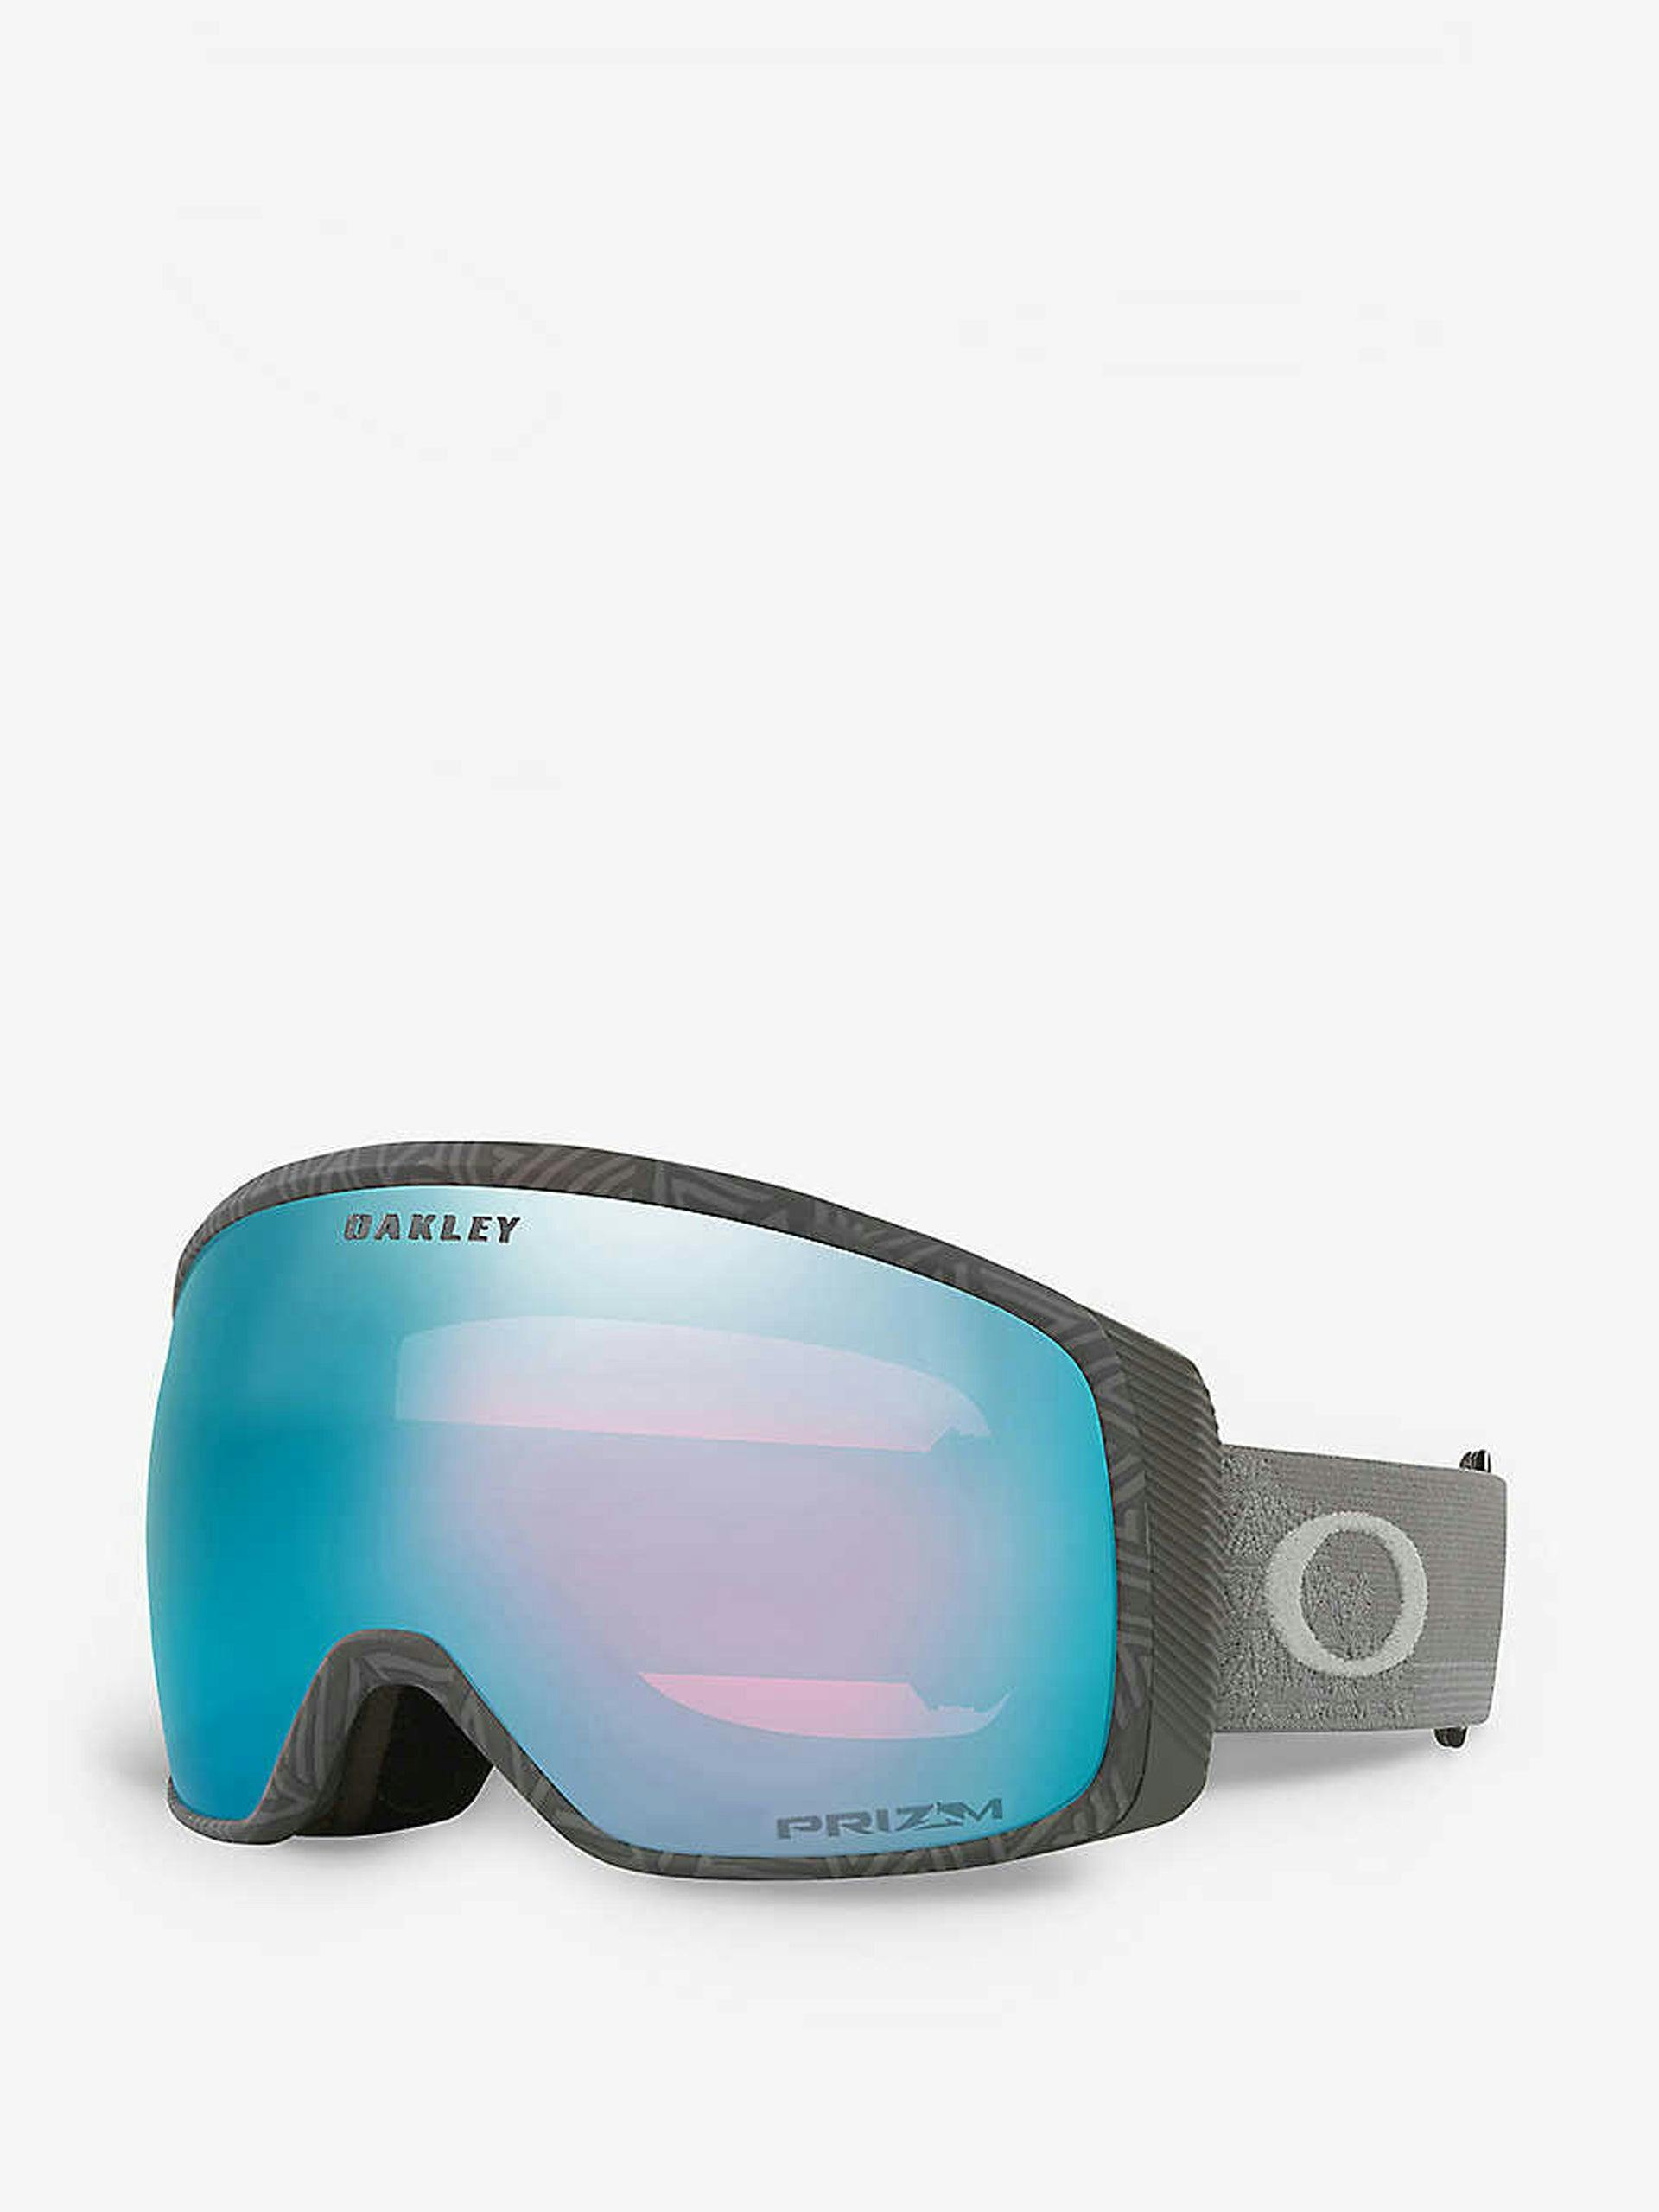 Blue and grey lensed ski goggles